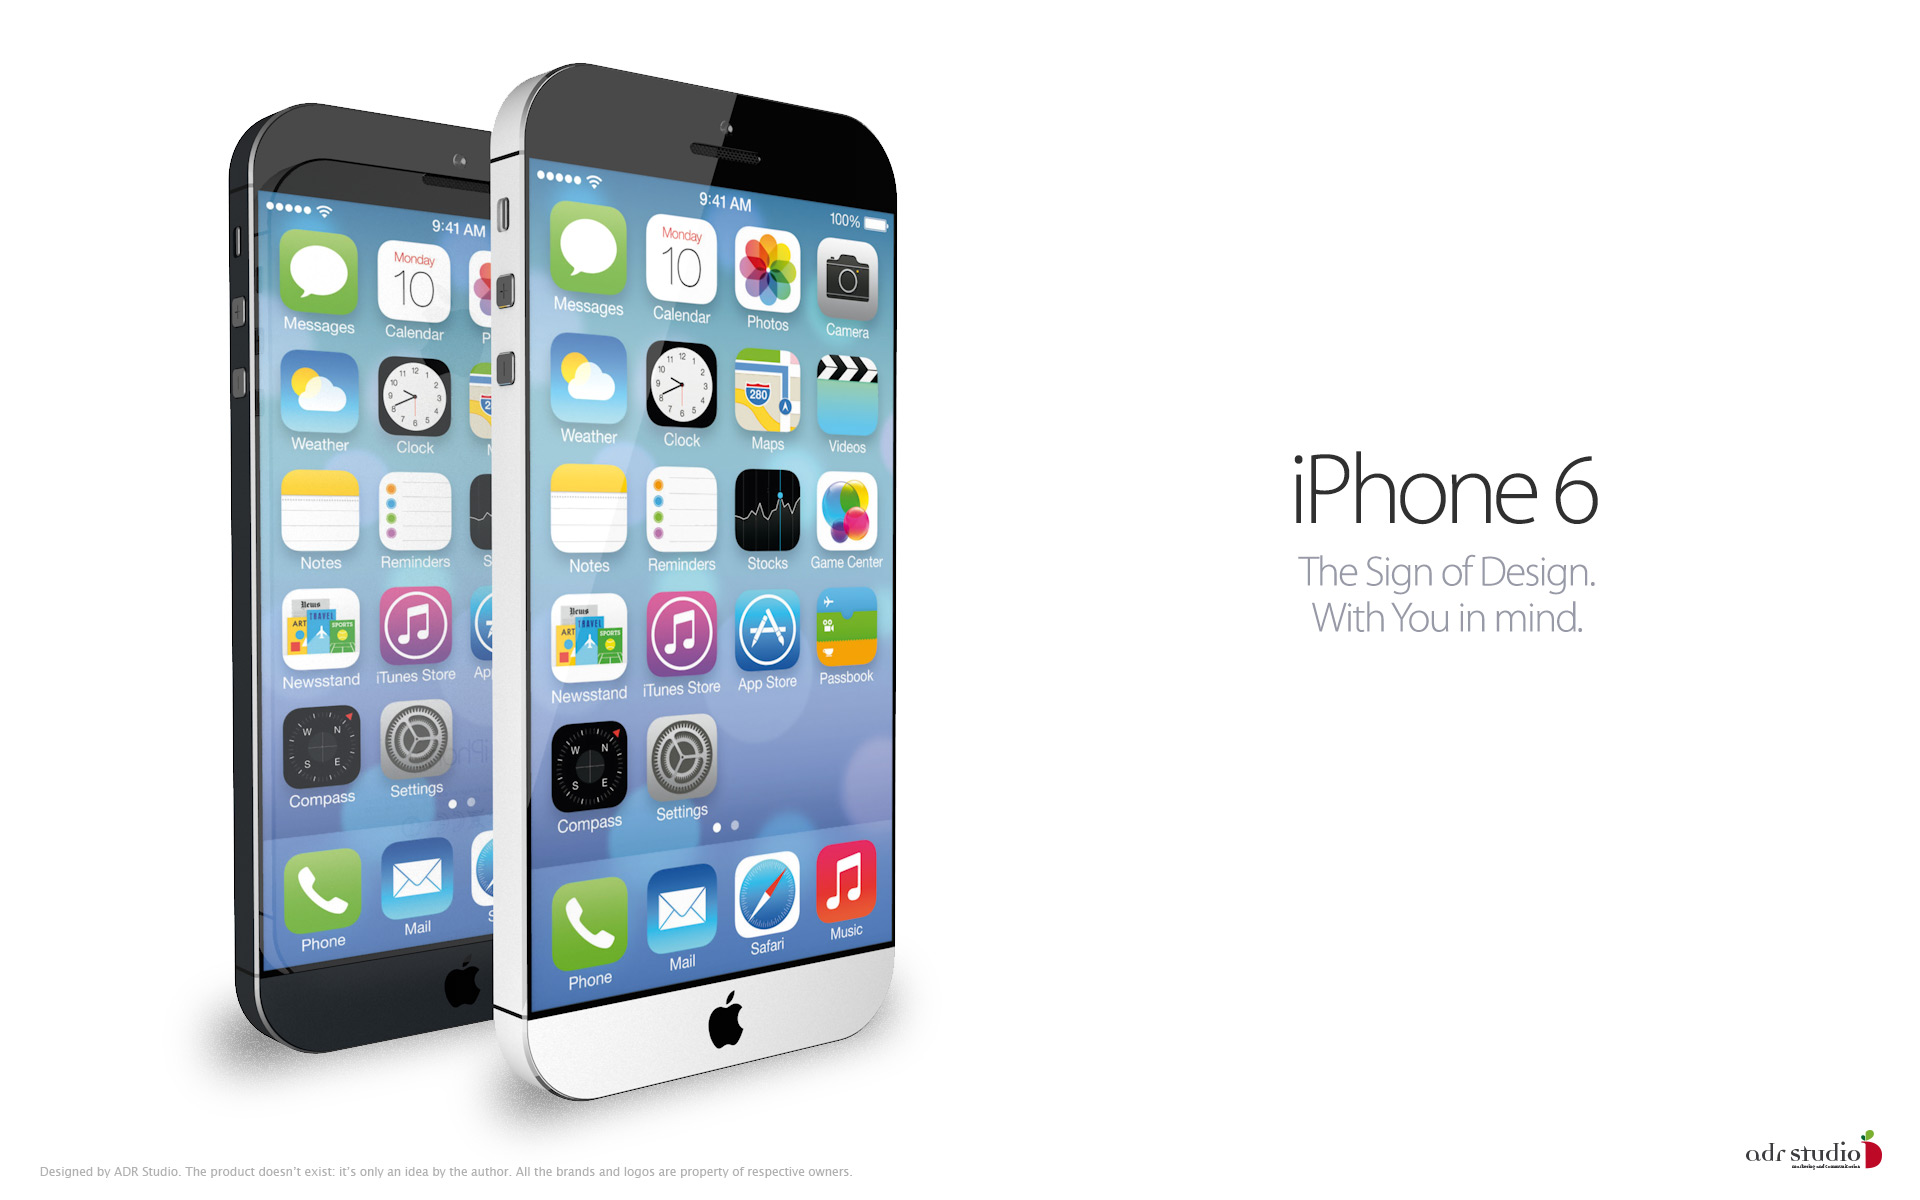 iPhone 6 mit iOS 7 - The Sign of Design! 1